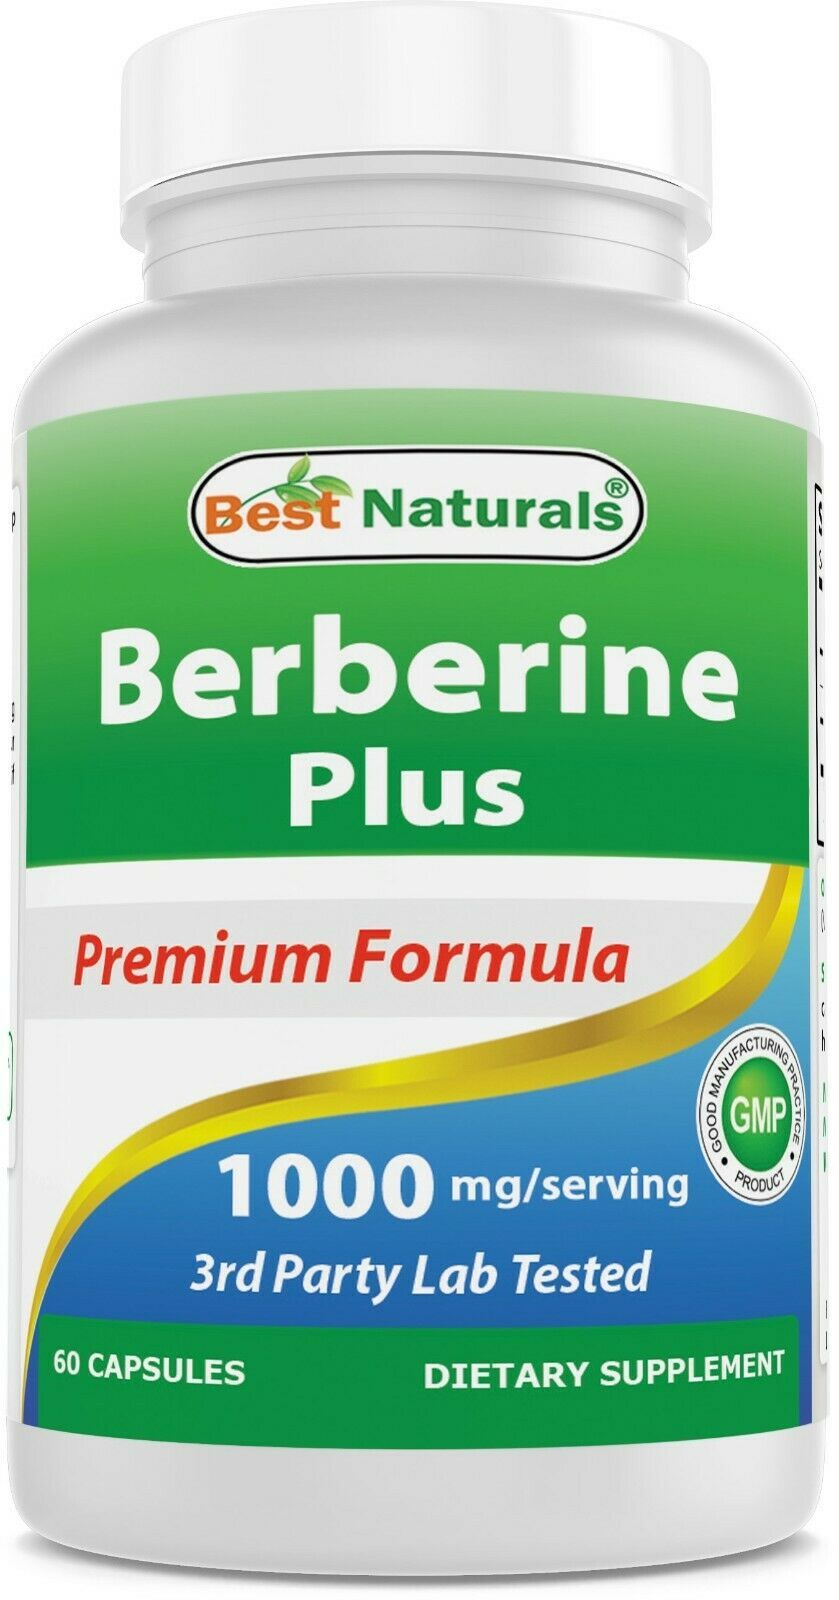 Berberine 1000mg plus Zinc and Vitamin C 60 Caps Gluten Free